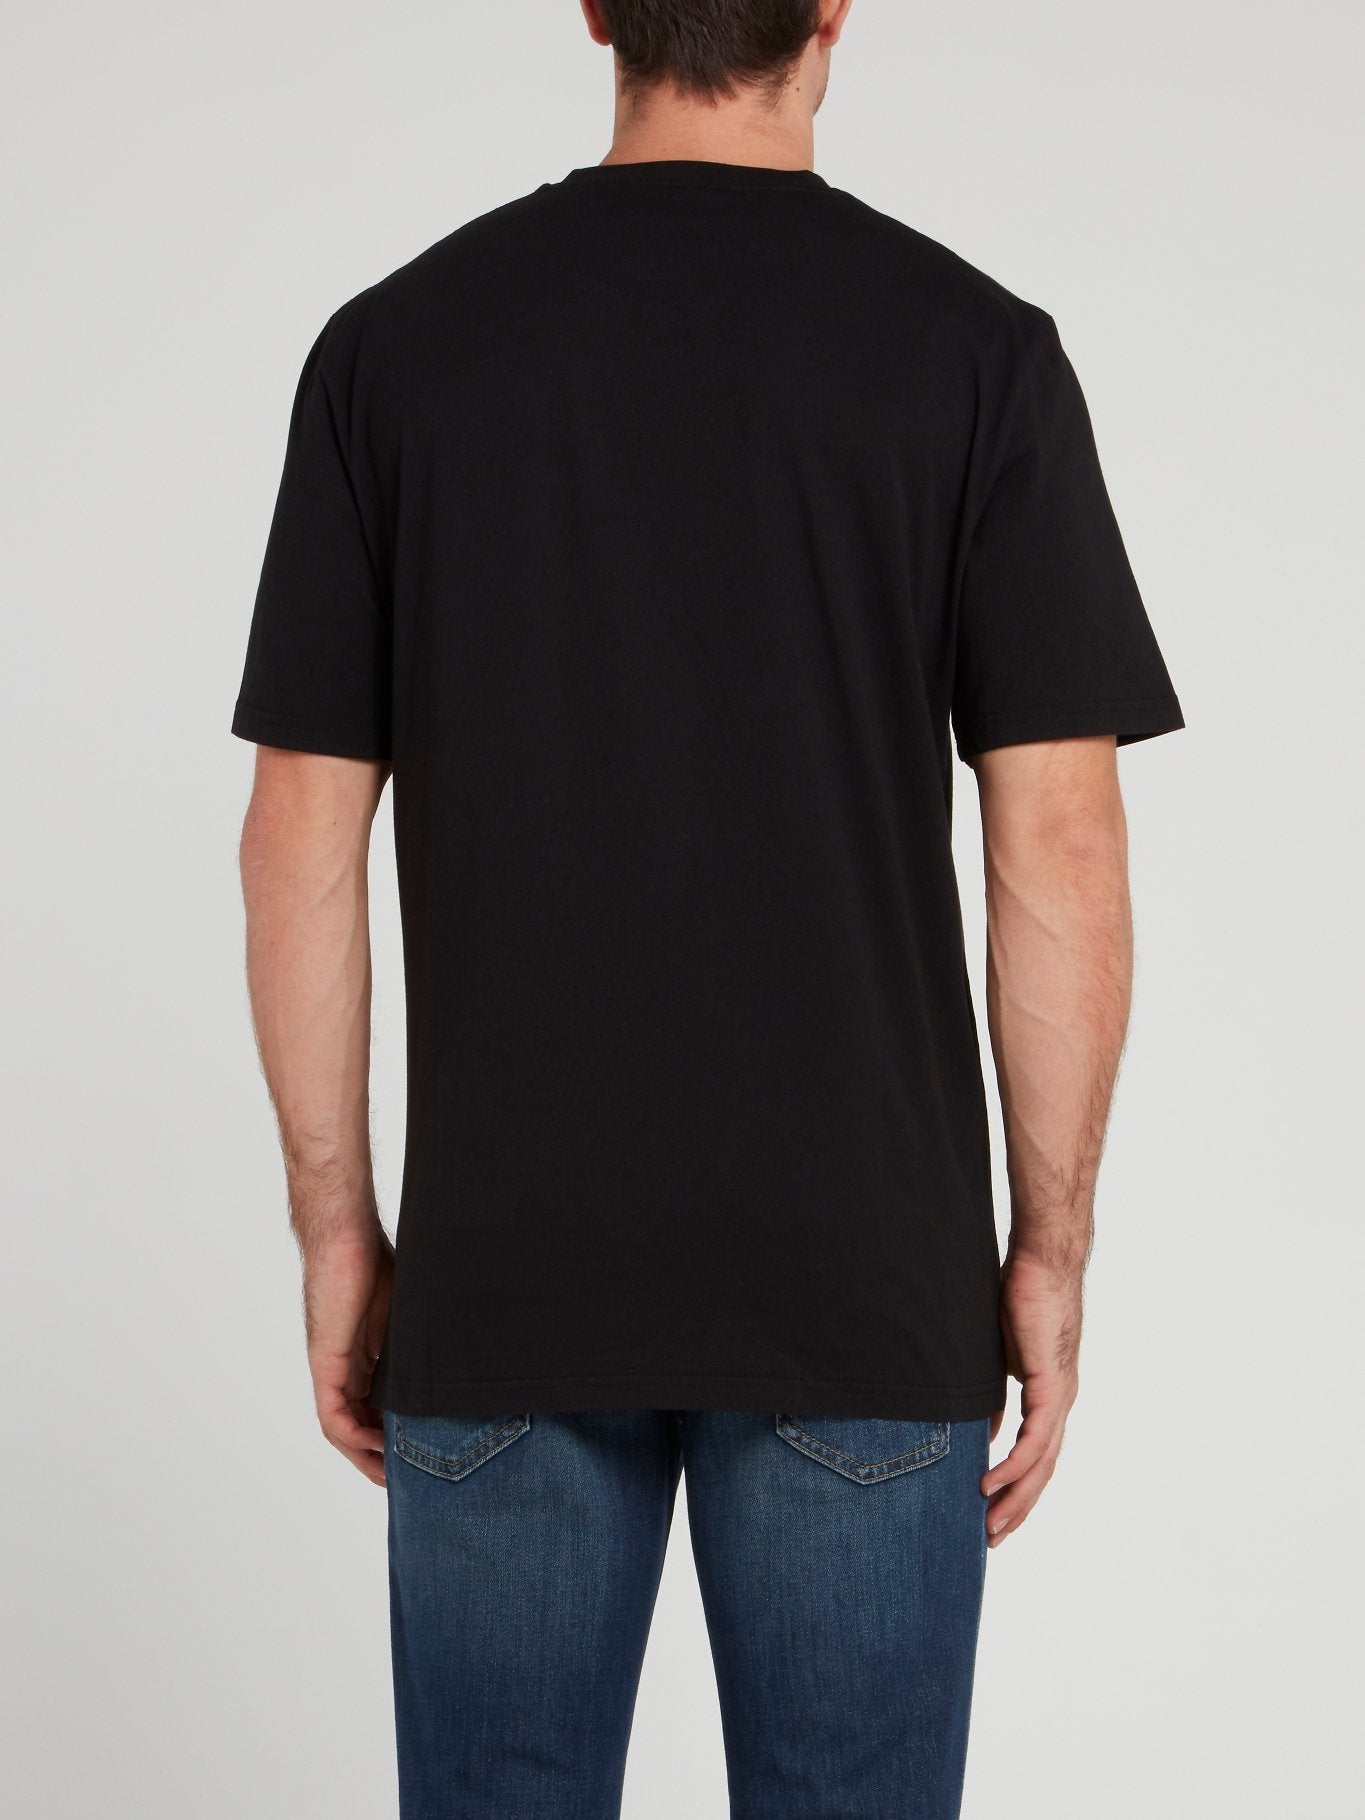 Black Printed Half Sleeve T-Shirt